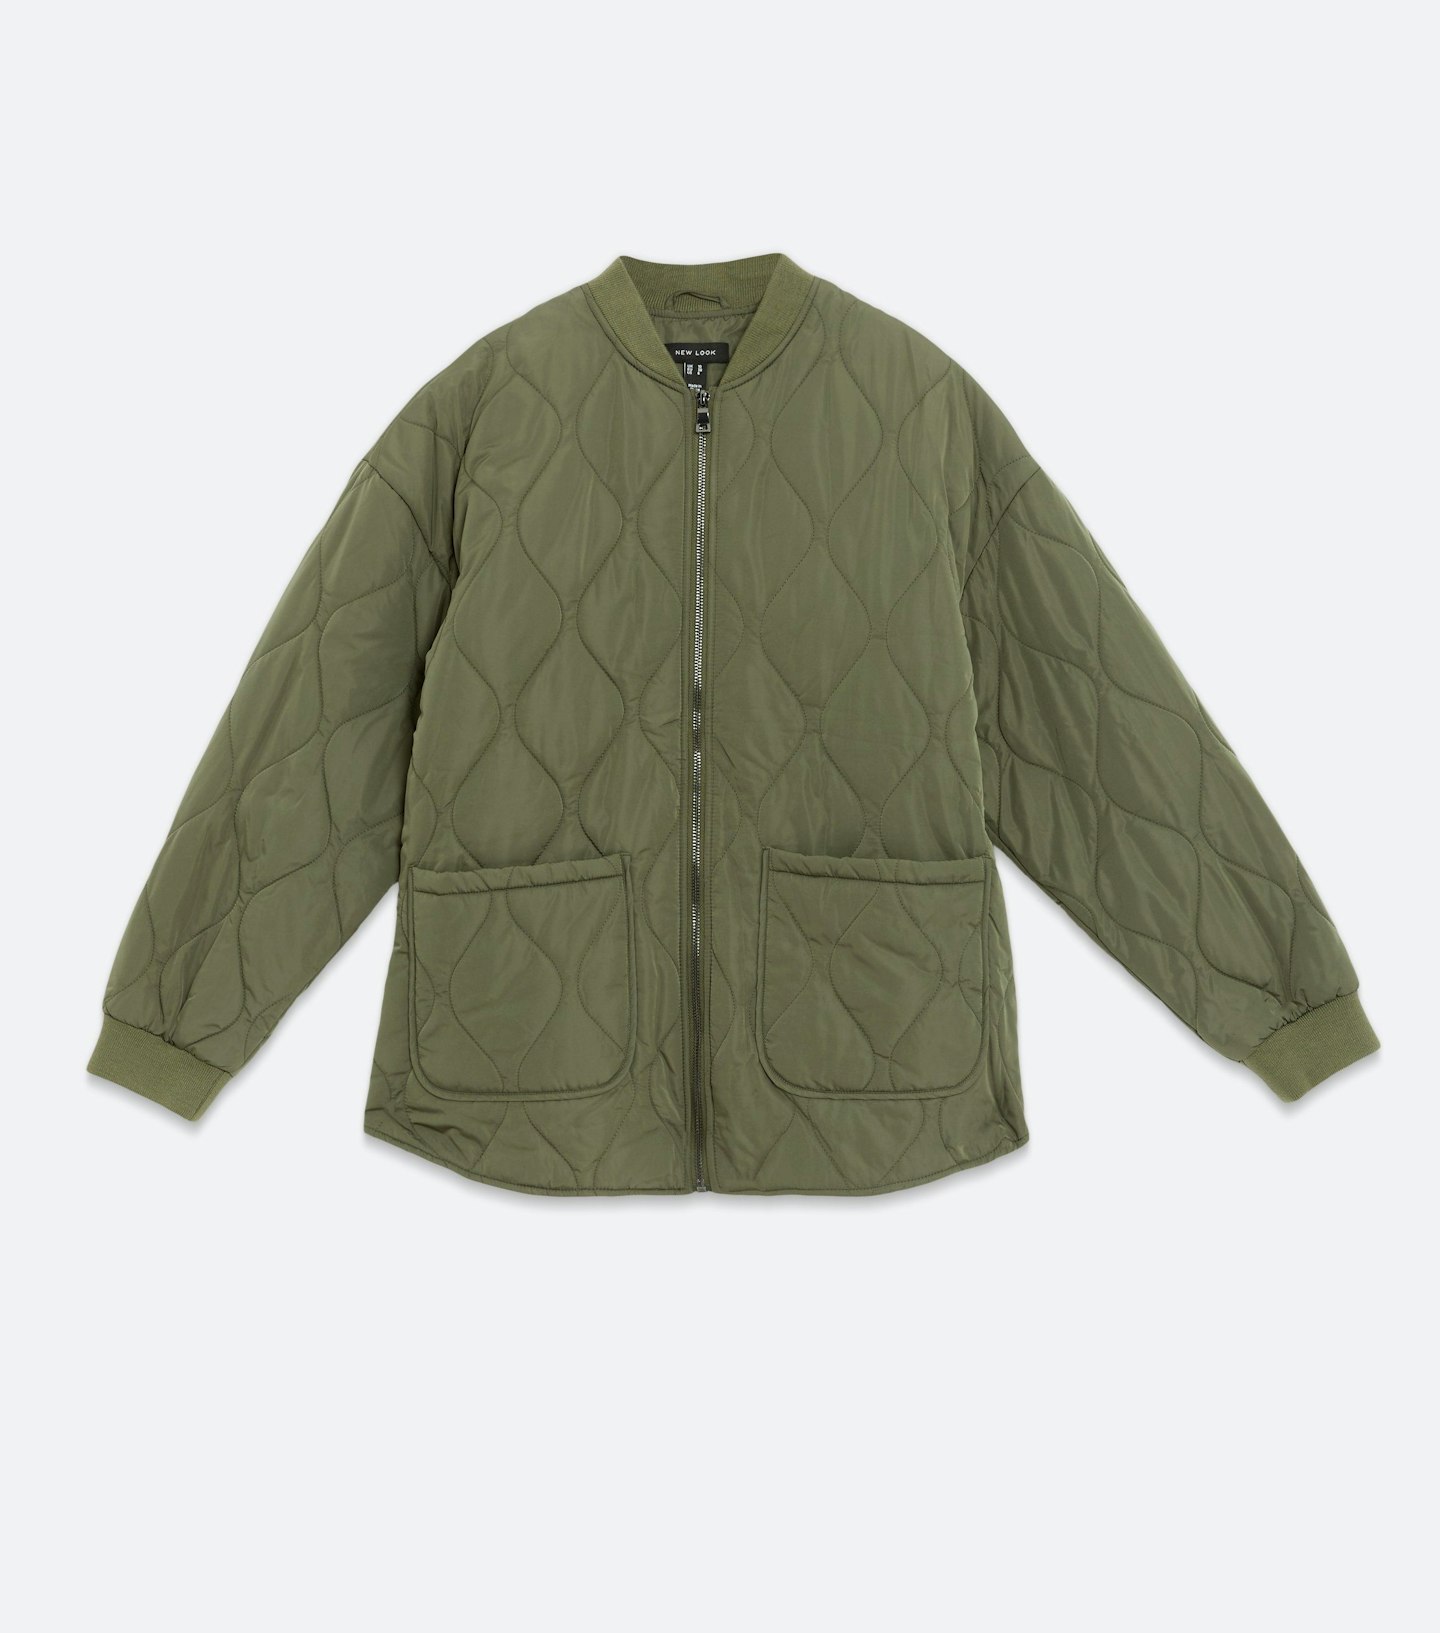 New Look, Khaki Quilted Zip Jacket, £33.99